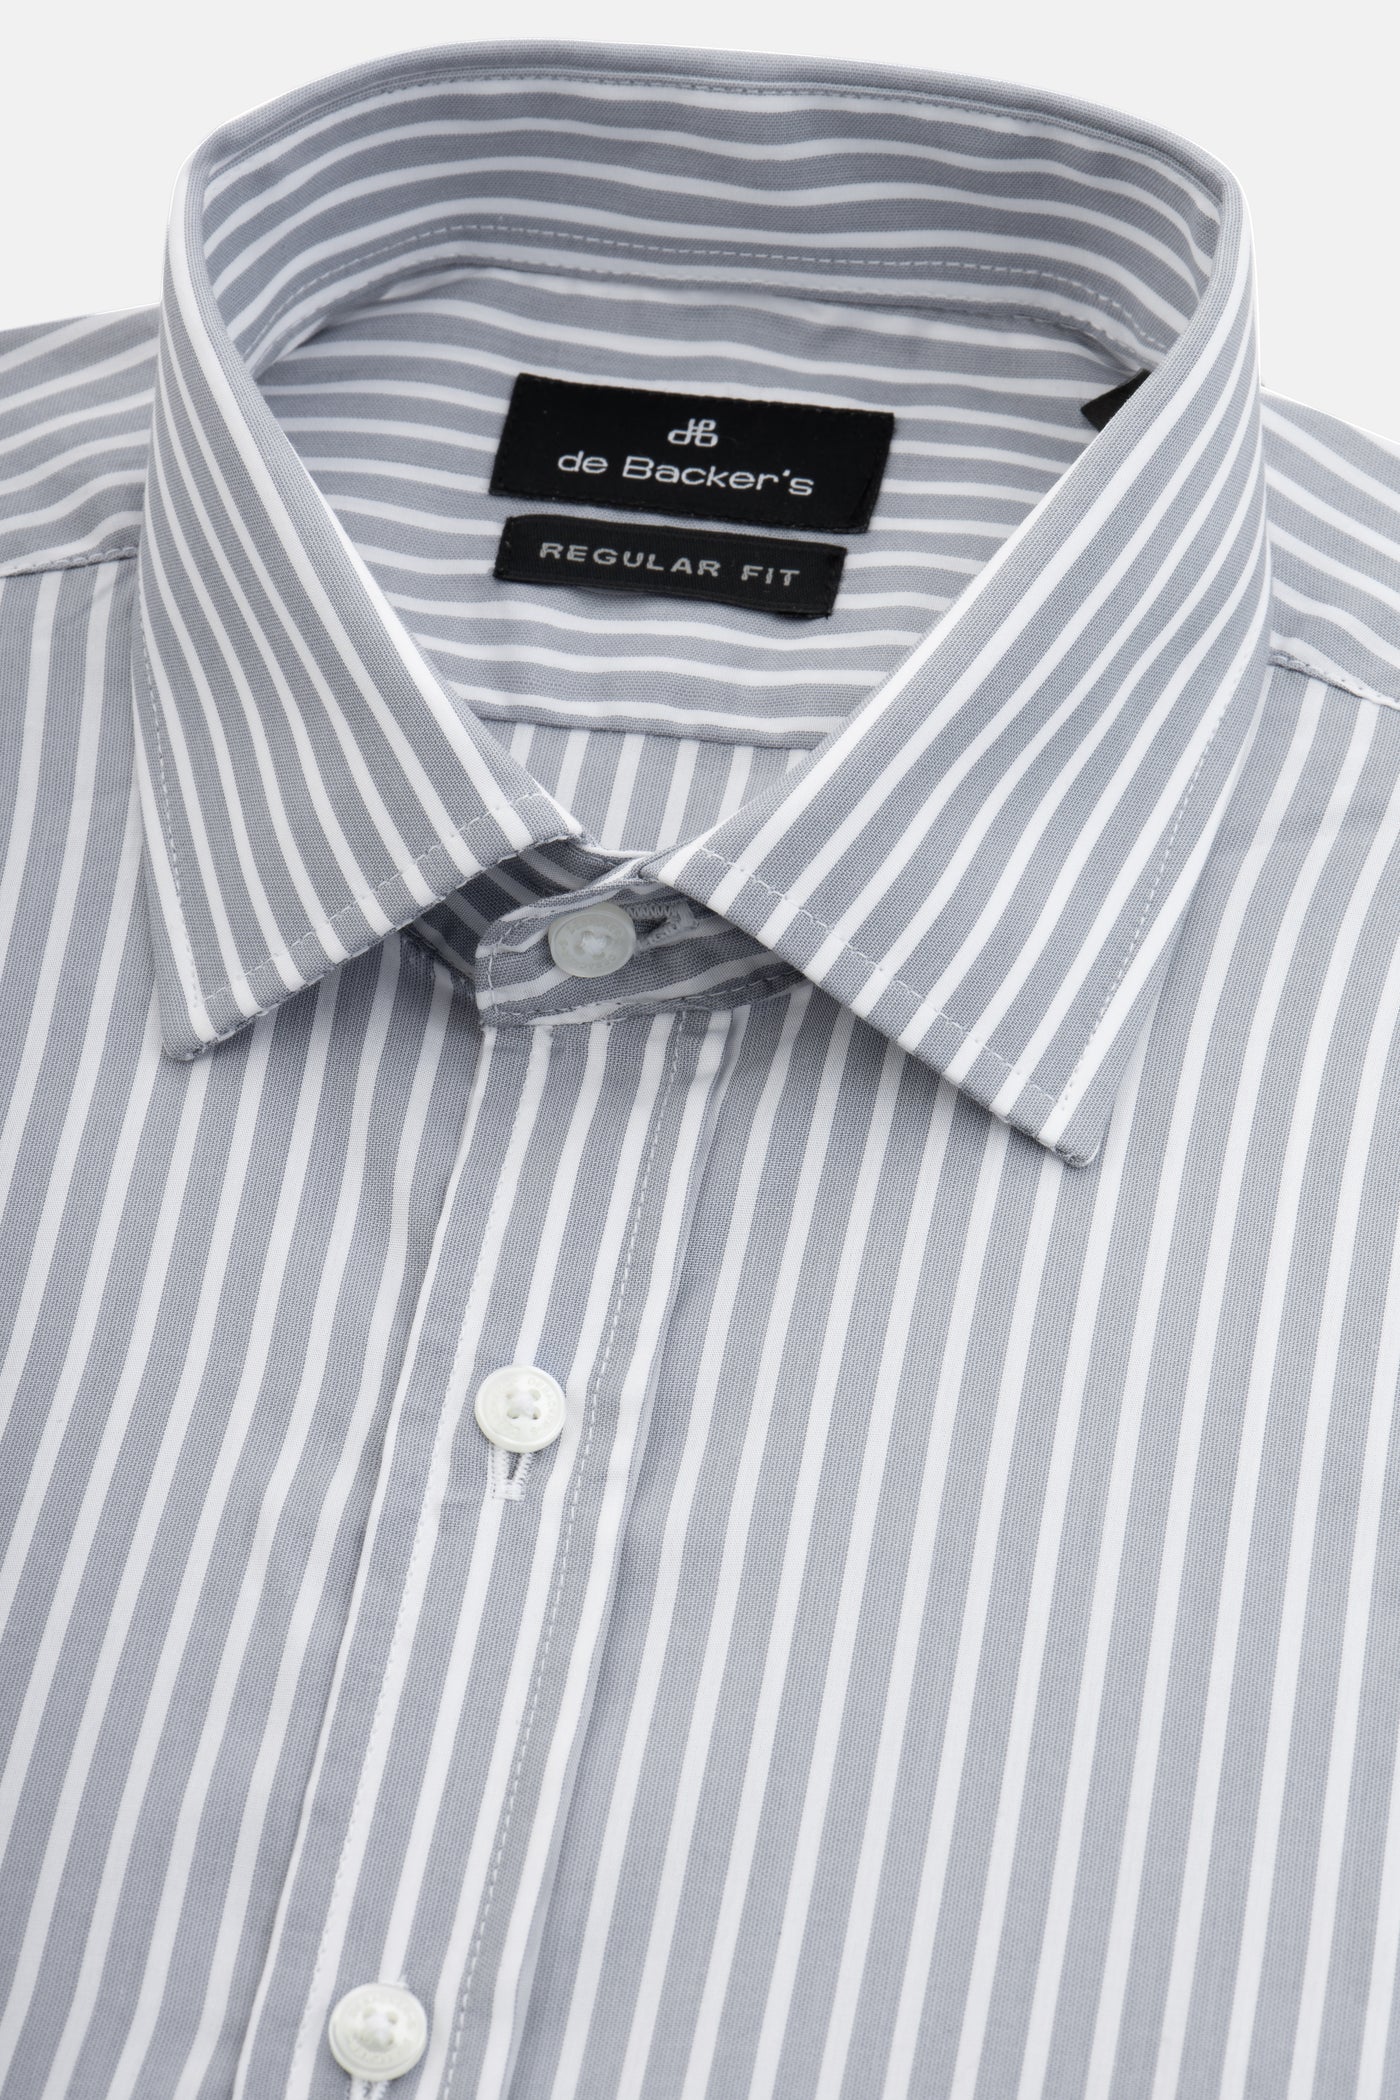 Striped Light Gray & White Smart Casual Shirt